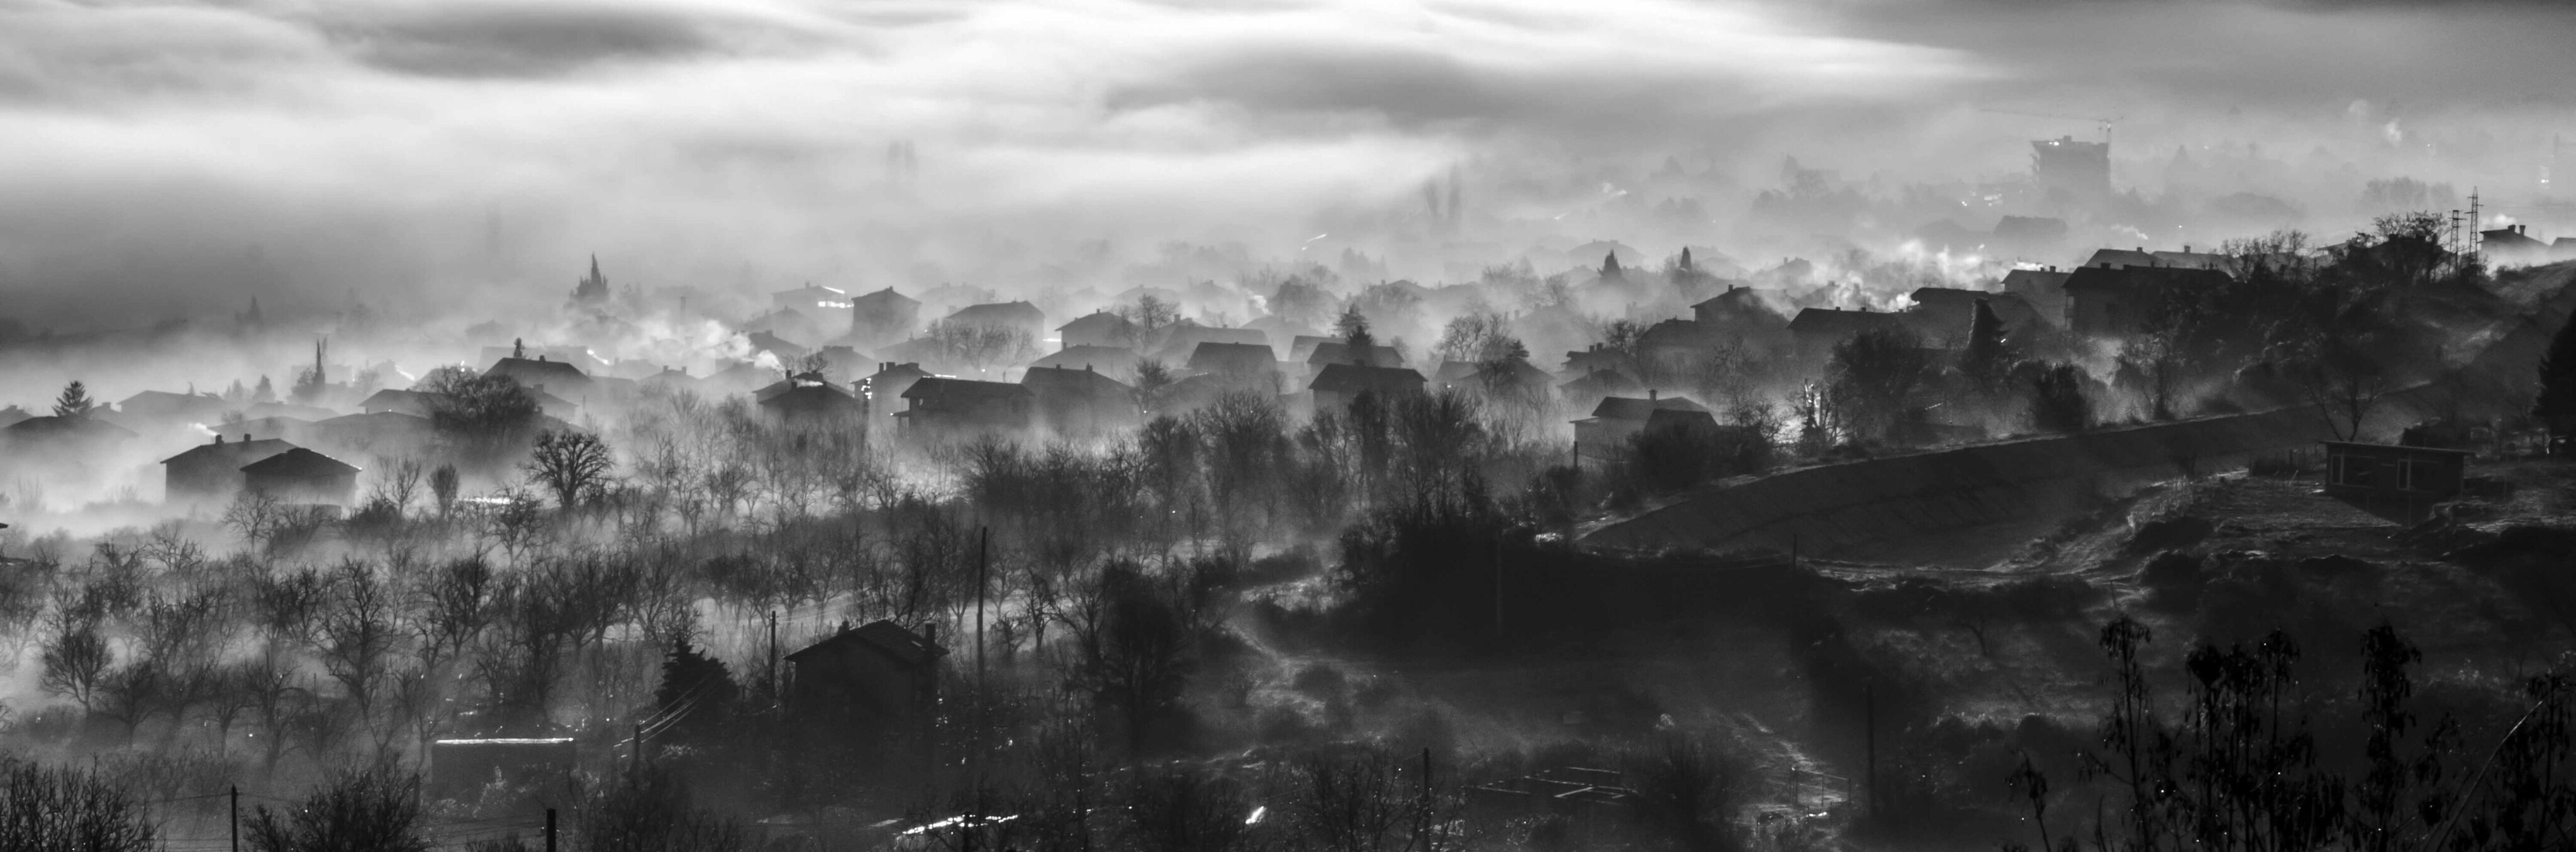 Misty Morning in Bulgaria by Diana Metodieva